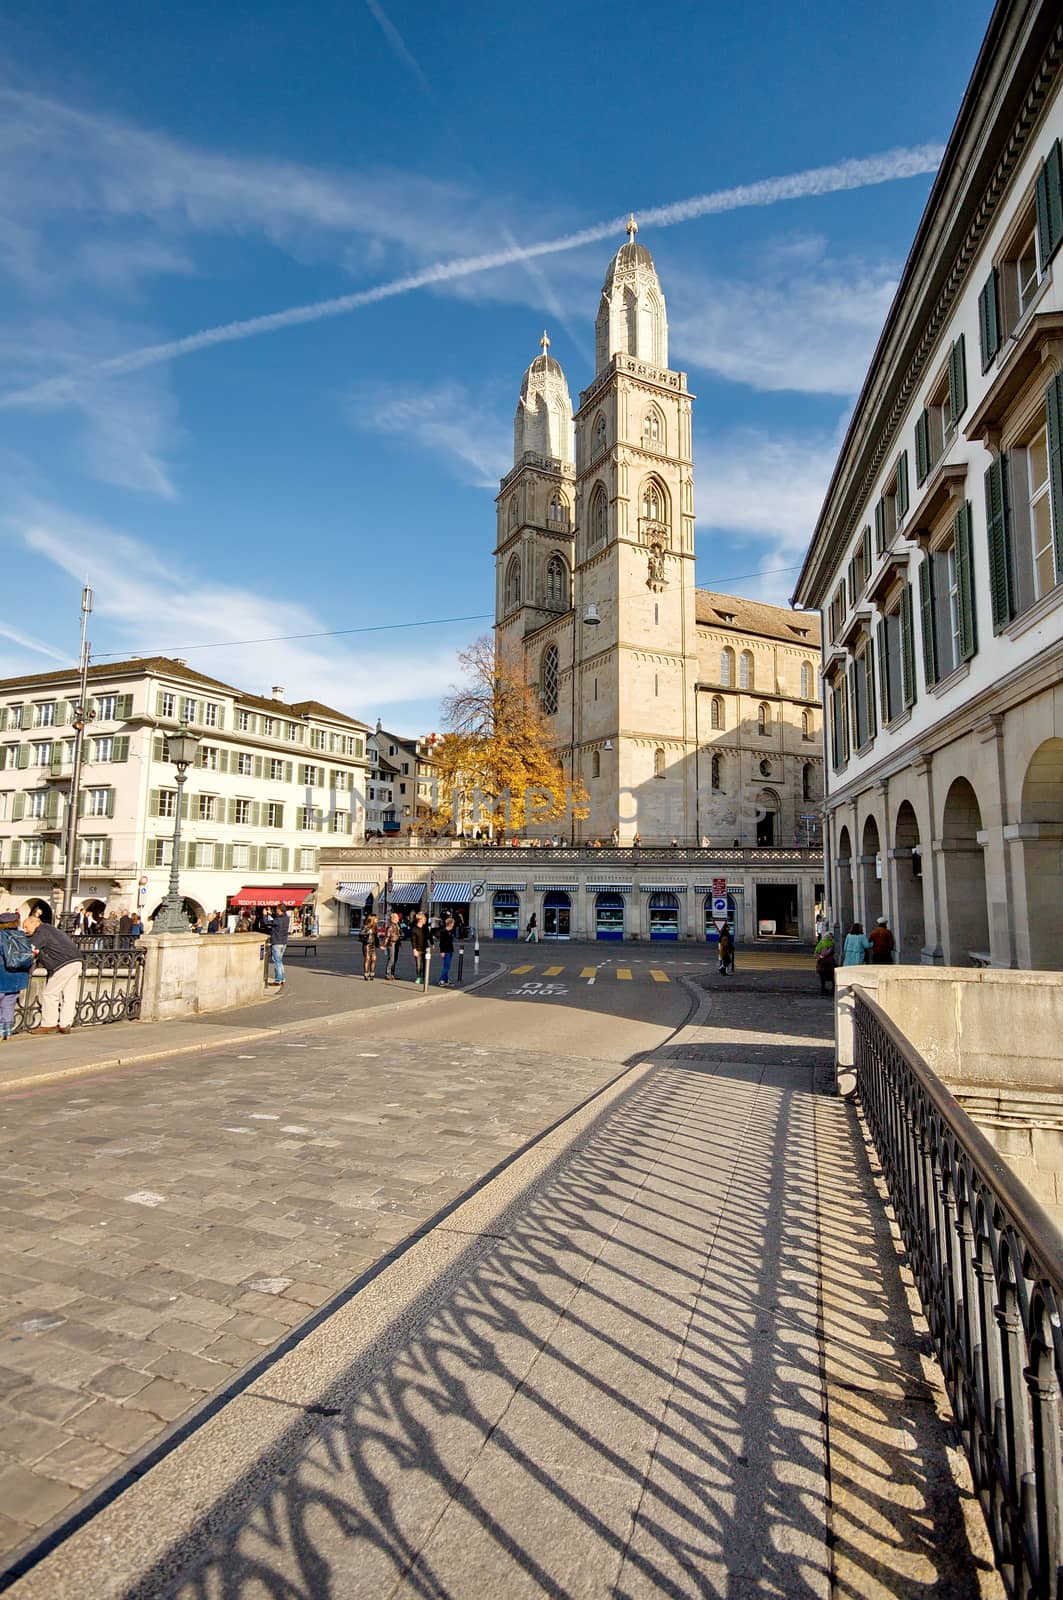 Cathedral of Zurich, Switzerland by anderm